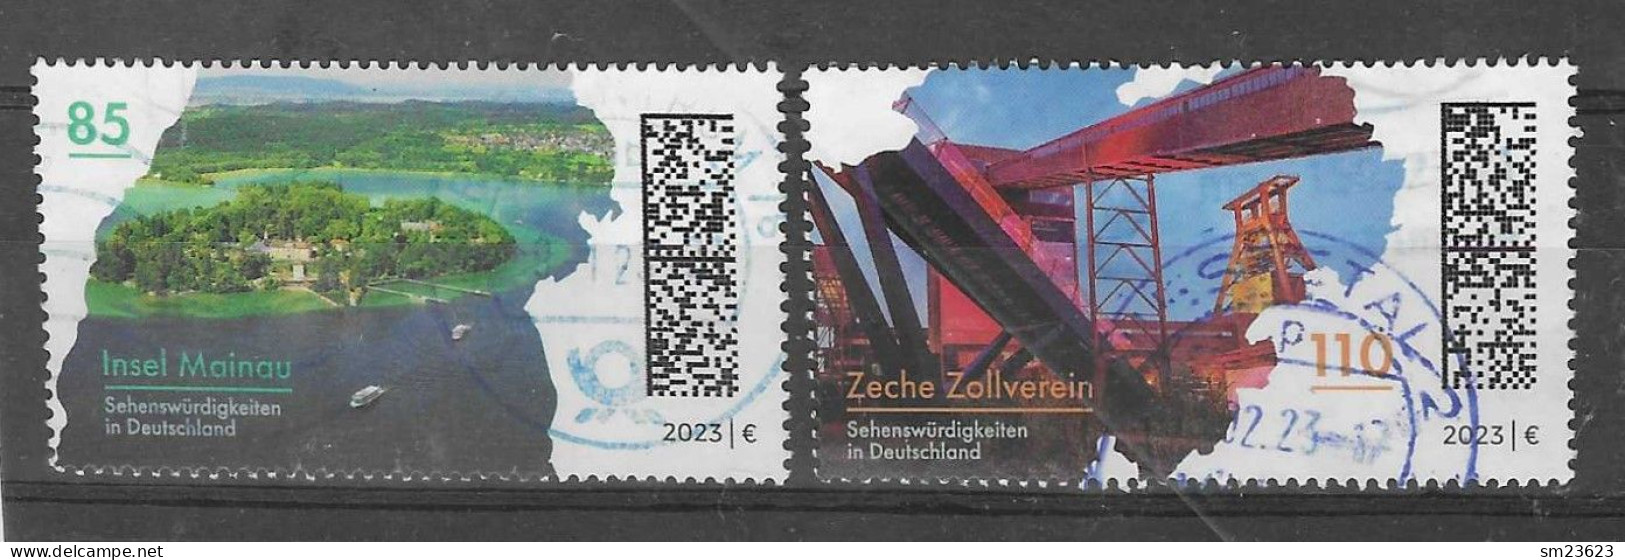 BRD 2023  Mi.Nr. 3738 / 39, Insel Mainau / Zeche Zollverein - Gestempelt / Fine Used / (o) - Gebruikt